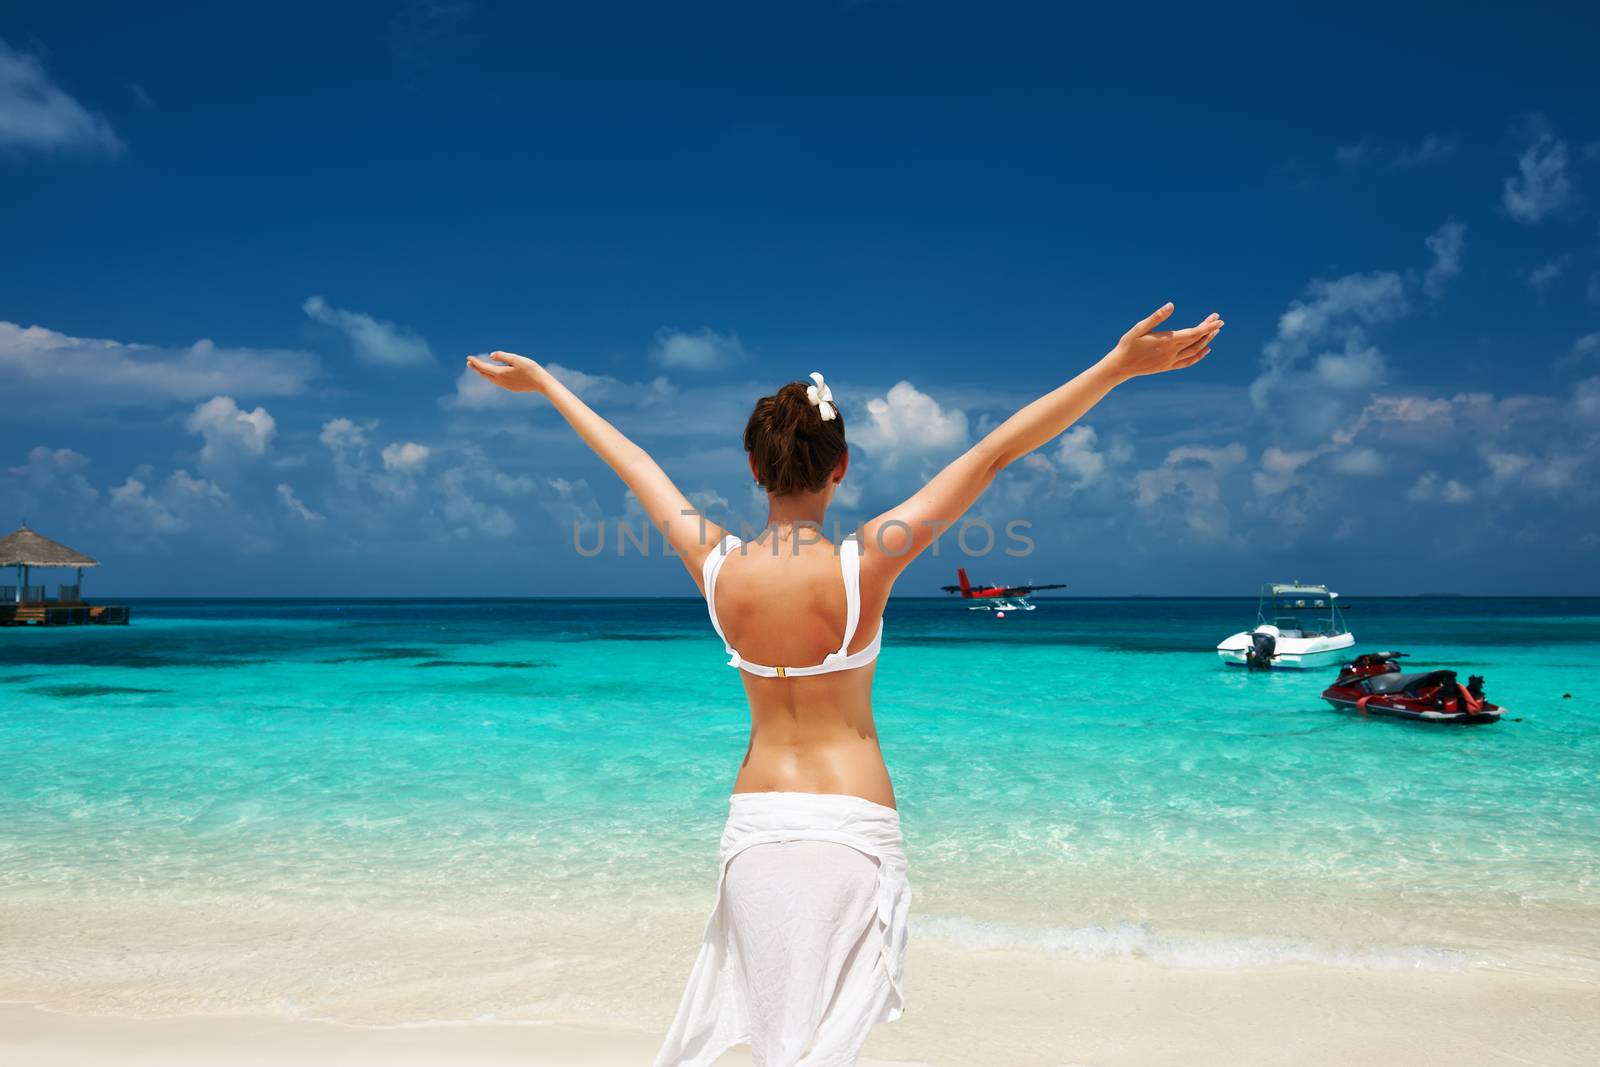 Woman in bikini at tropical beach. Seaplane at background.